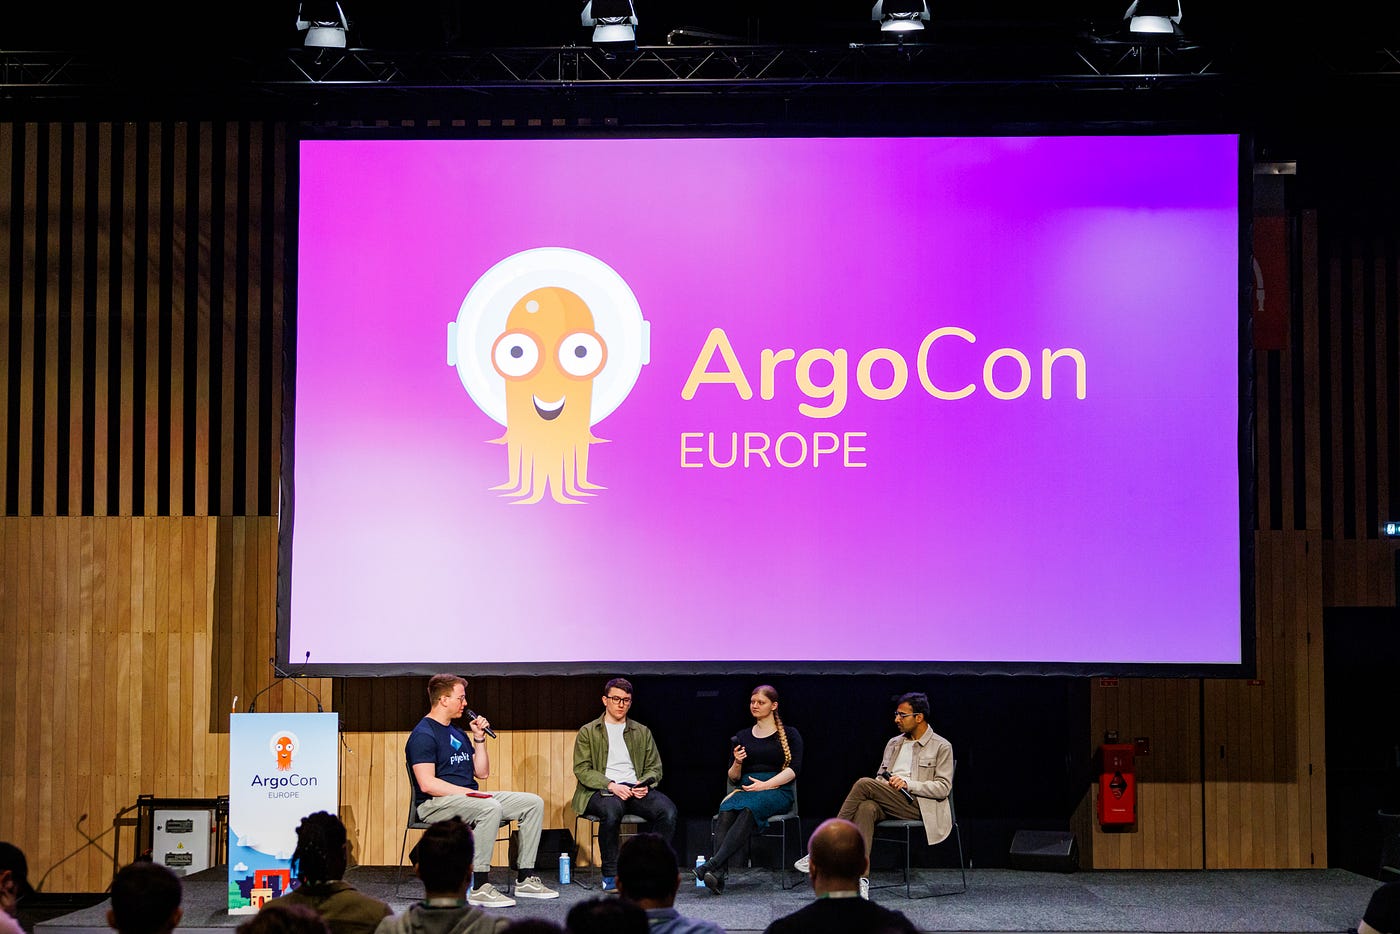 ArgoCon Europe